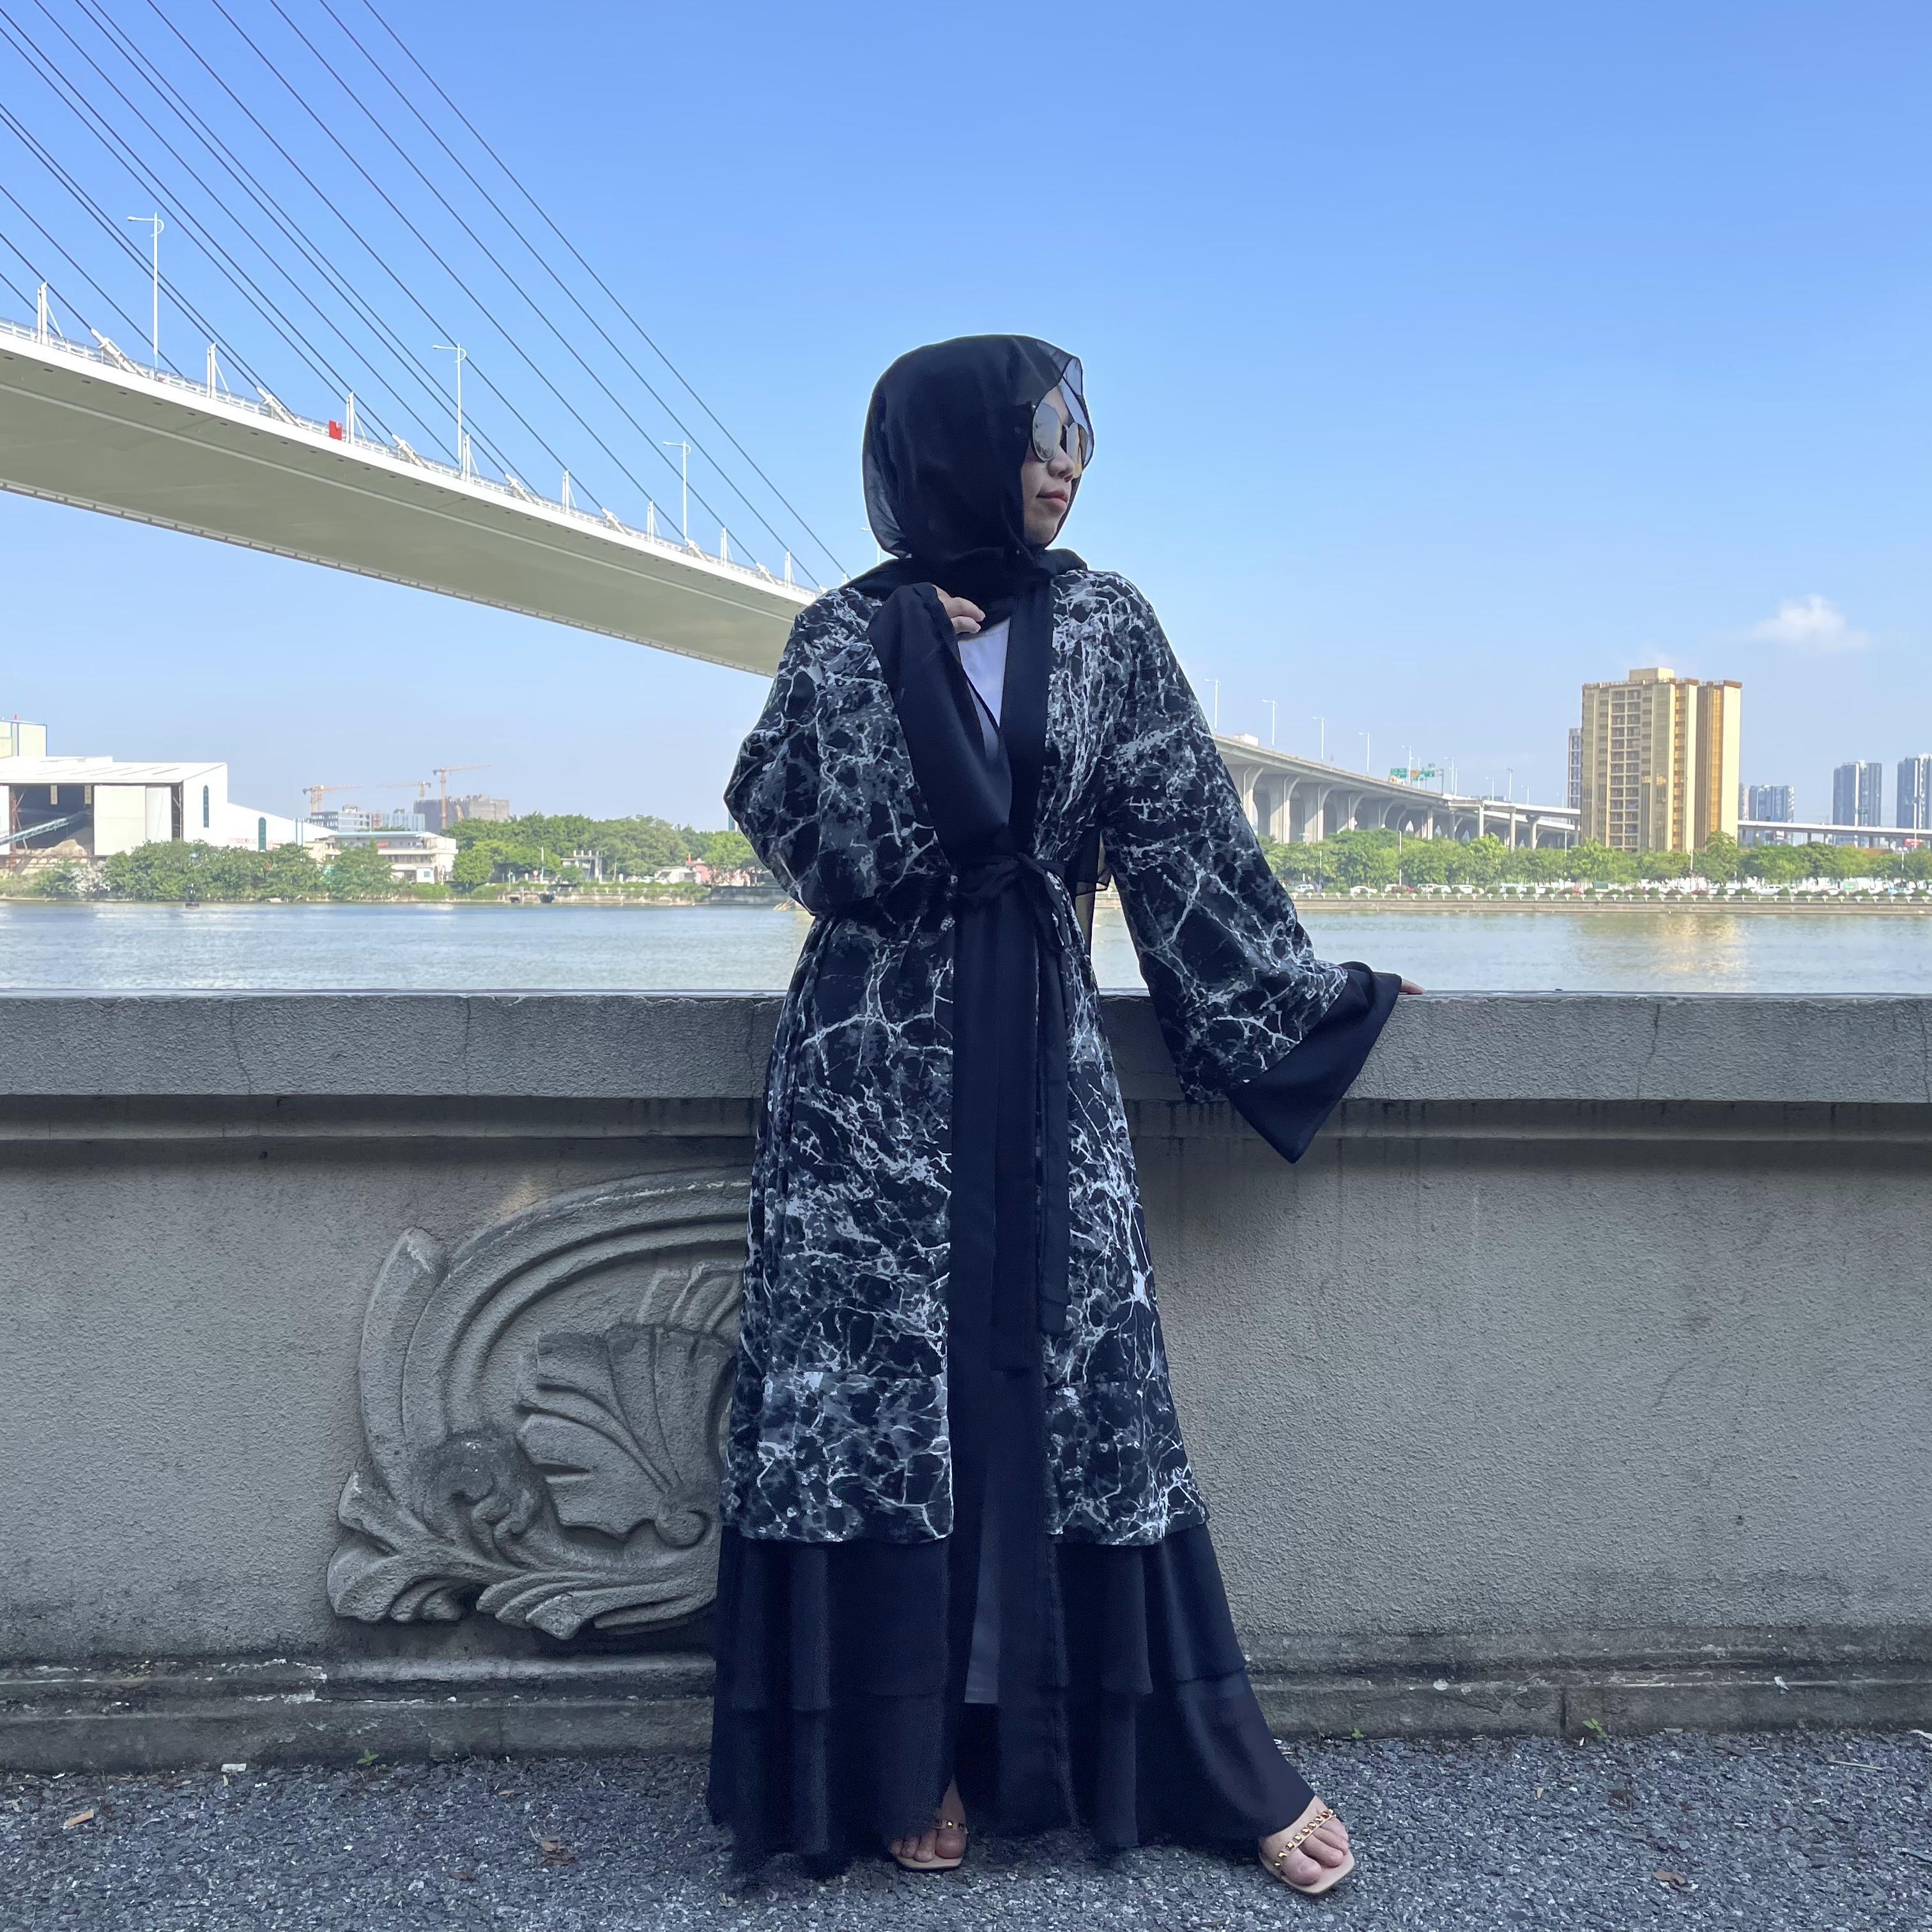 1884# Latest Designs Printed Chiffon Abaya With Ruffles Muslim Dress Dubai Size Summer Spring Islamic Clothing For Women - CHAOMENG MUSLIM SHOP